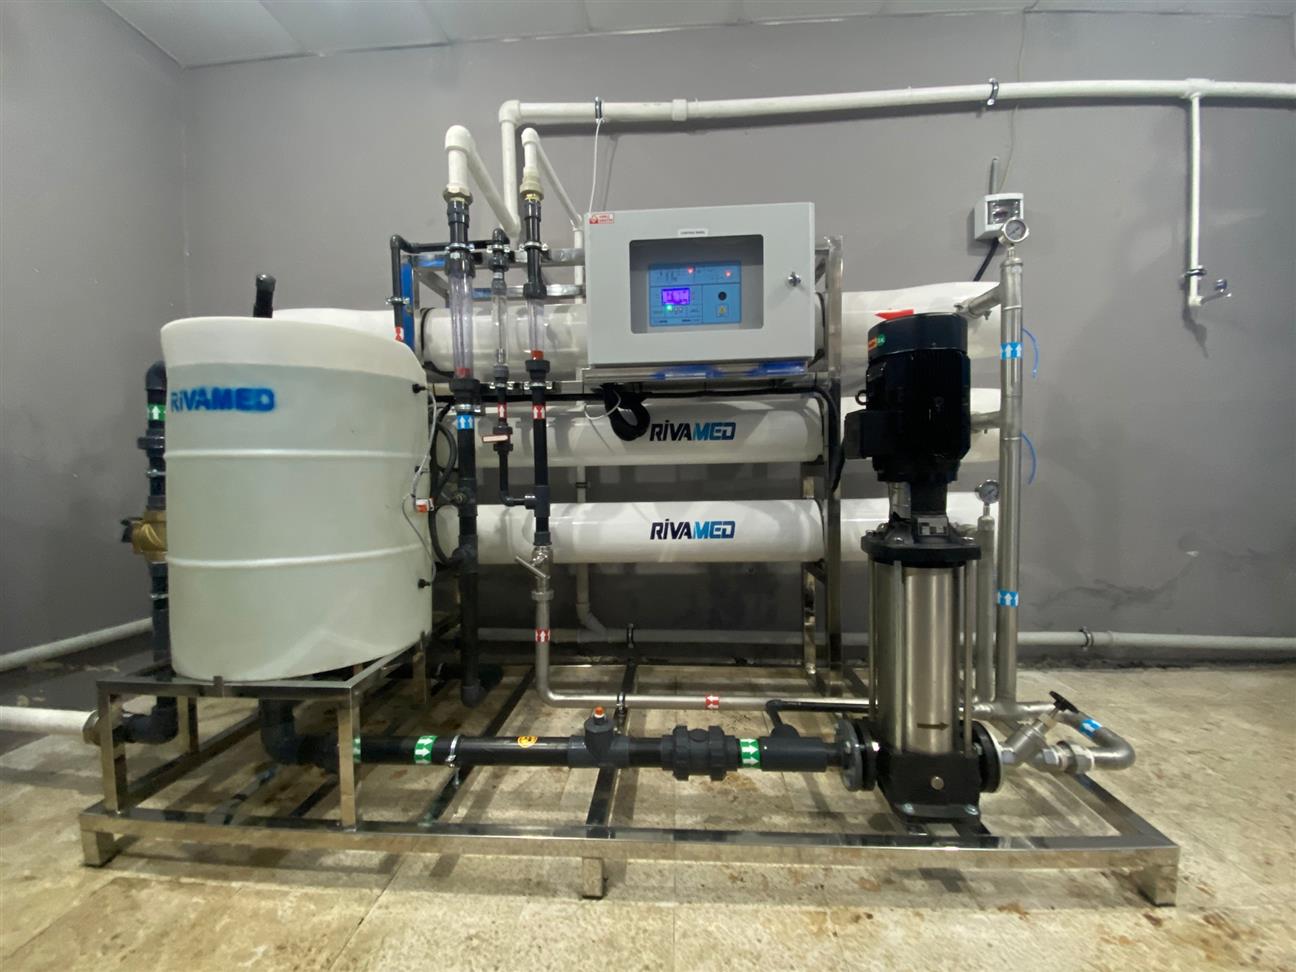 rivatec endüstriyel su arıtma sistemleri, rivamed industrial water treatment systems